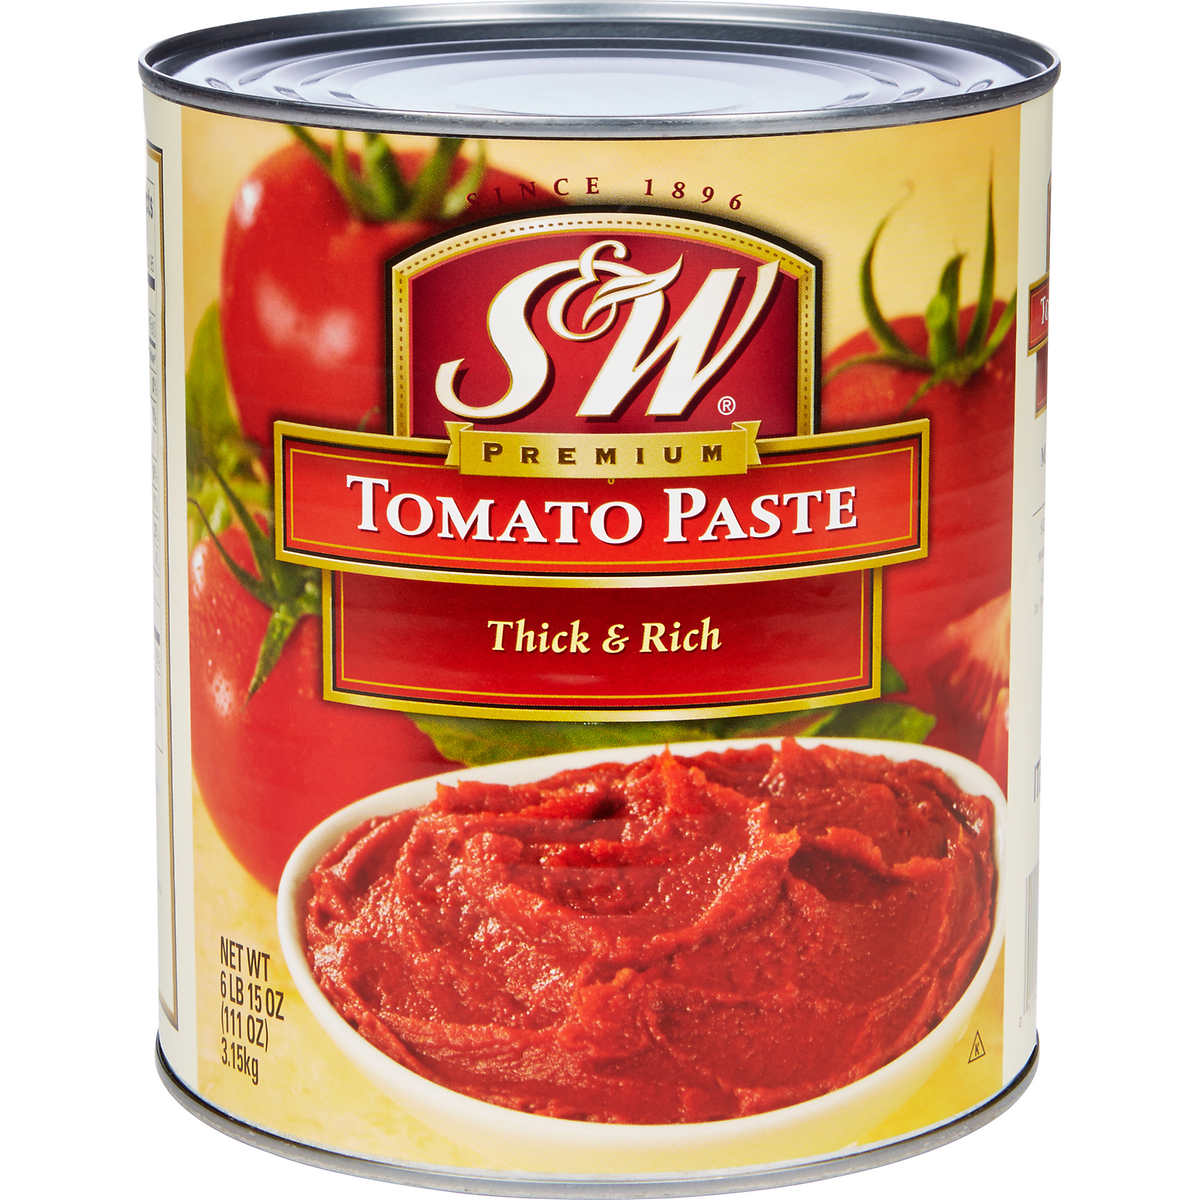 Pasta de tomate 4500gx6 - Tapa dura abierta - tomatopaste1-32